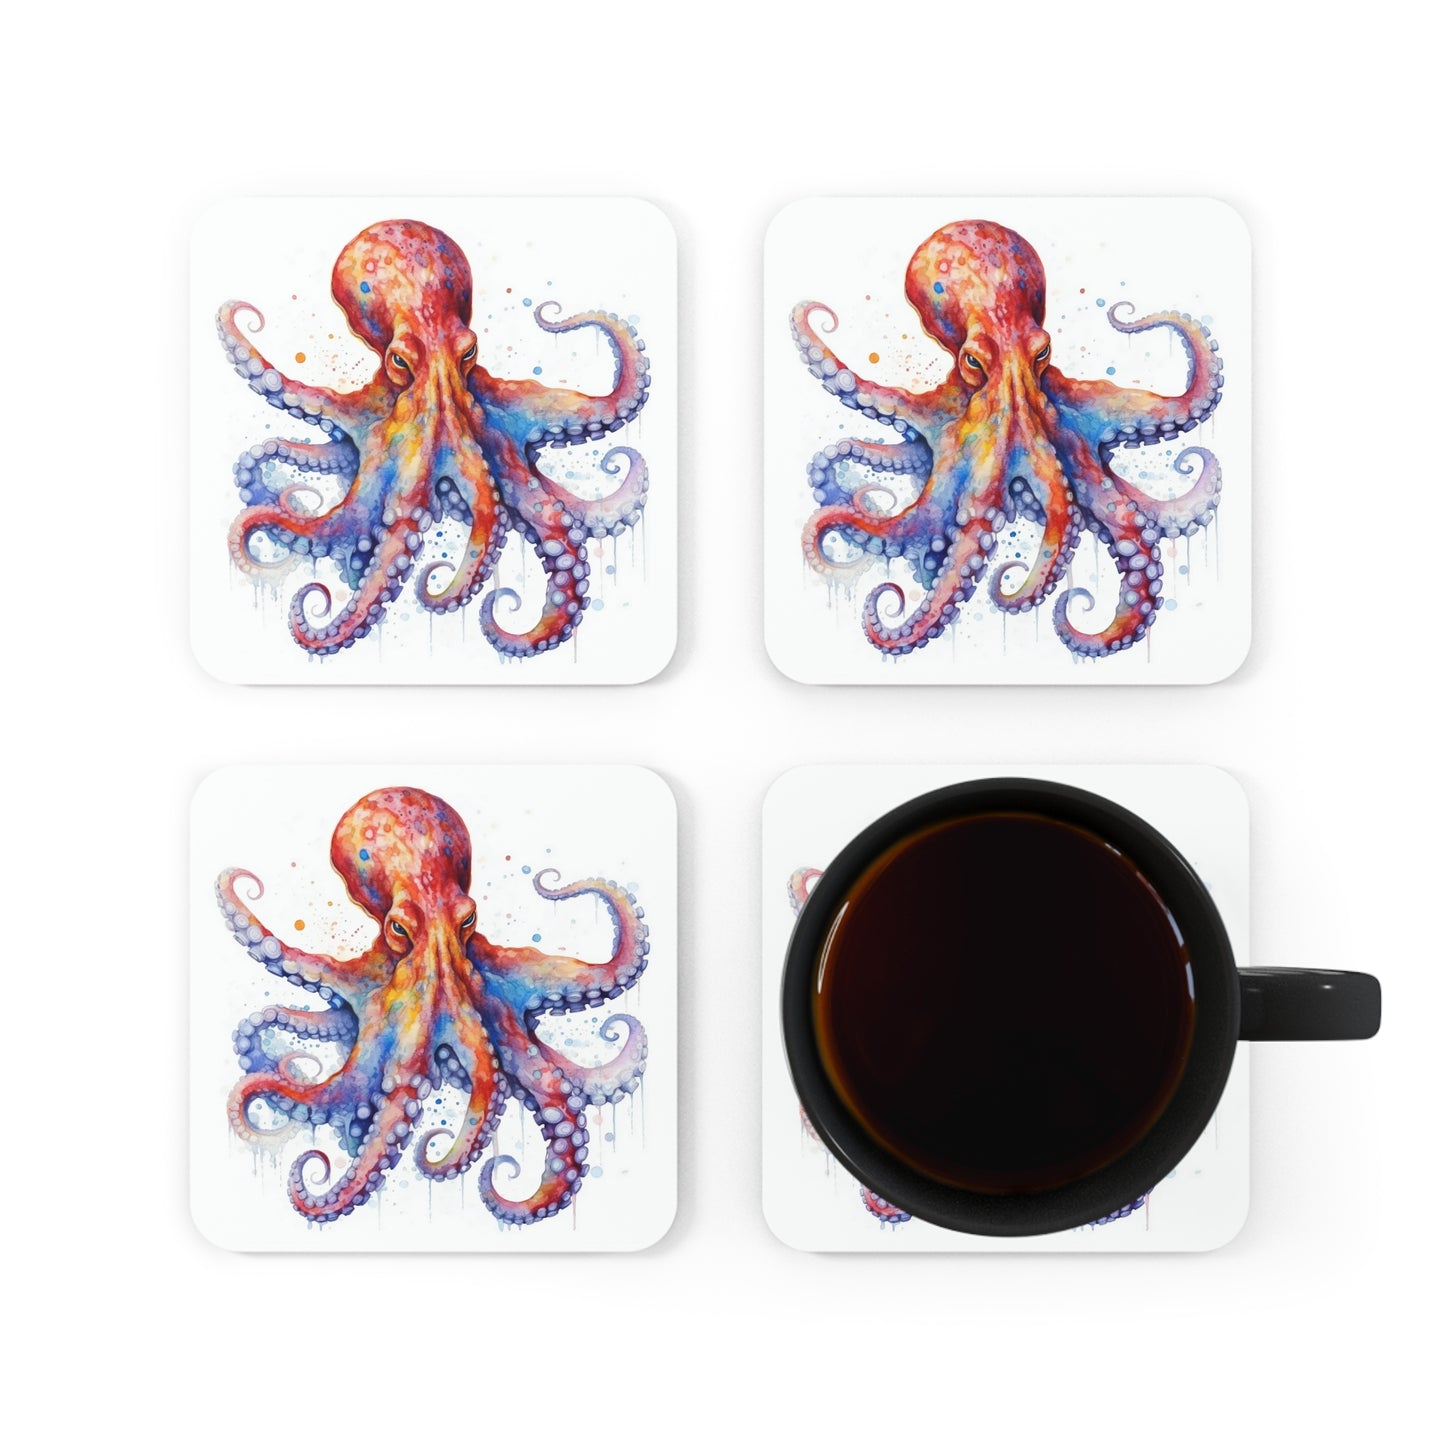 Watercolor Octopus Coaster Set of 4, Nautical Coasters, Sea Animal Coasters, Coffee Table Decor, Square Coasters, Drink Coaster, Cork Bottom